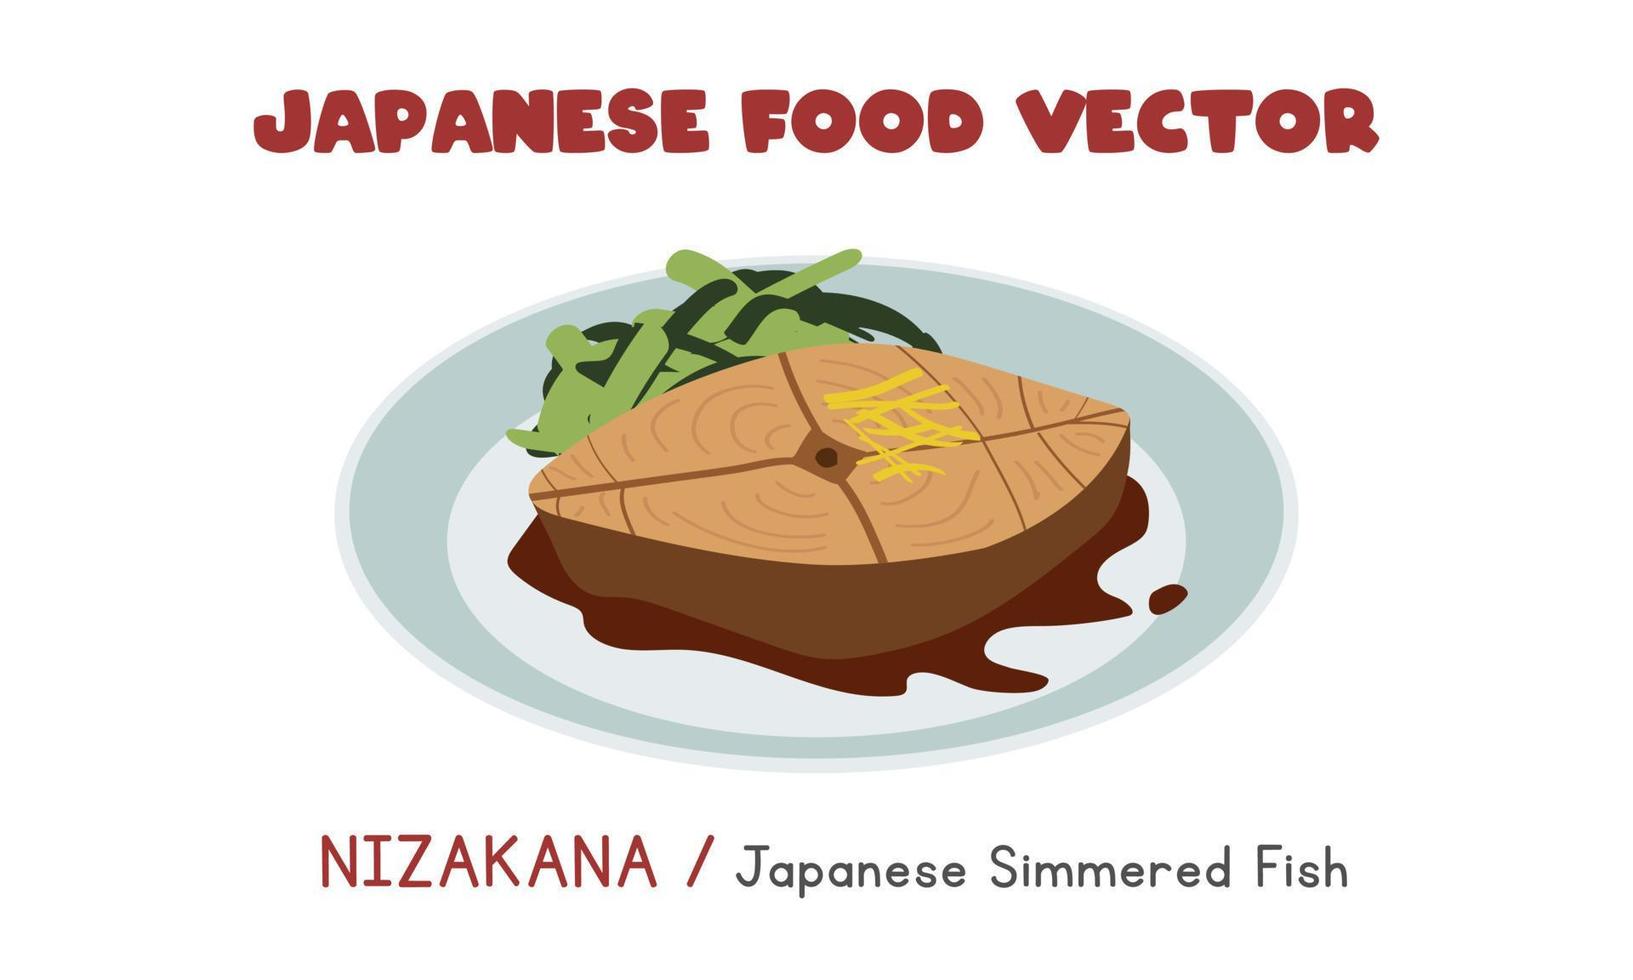 japansk nizakana - japansk simmered fisk platt vektor design illustration, ClipArt tecknad serie stil. asiatisk mat. japansk kök. japansk mat